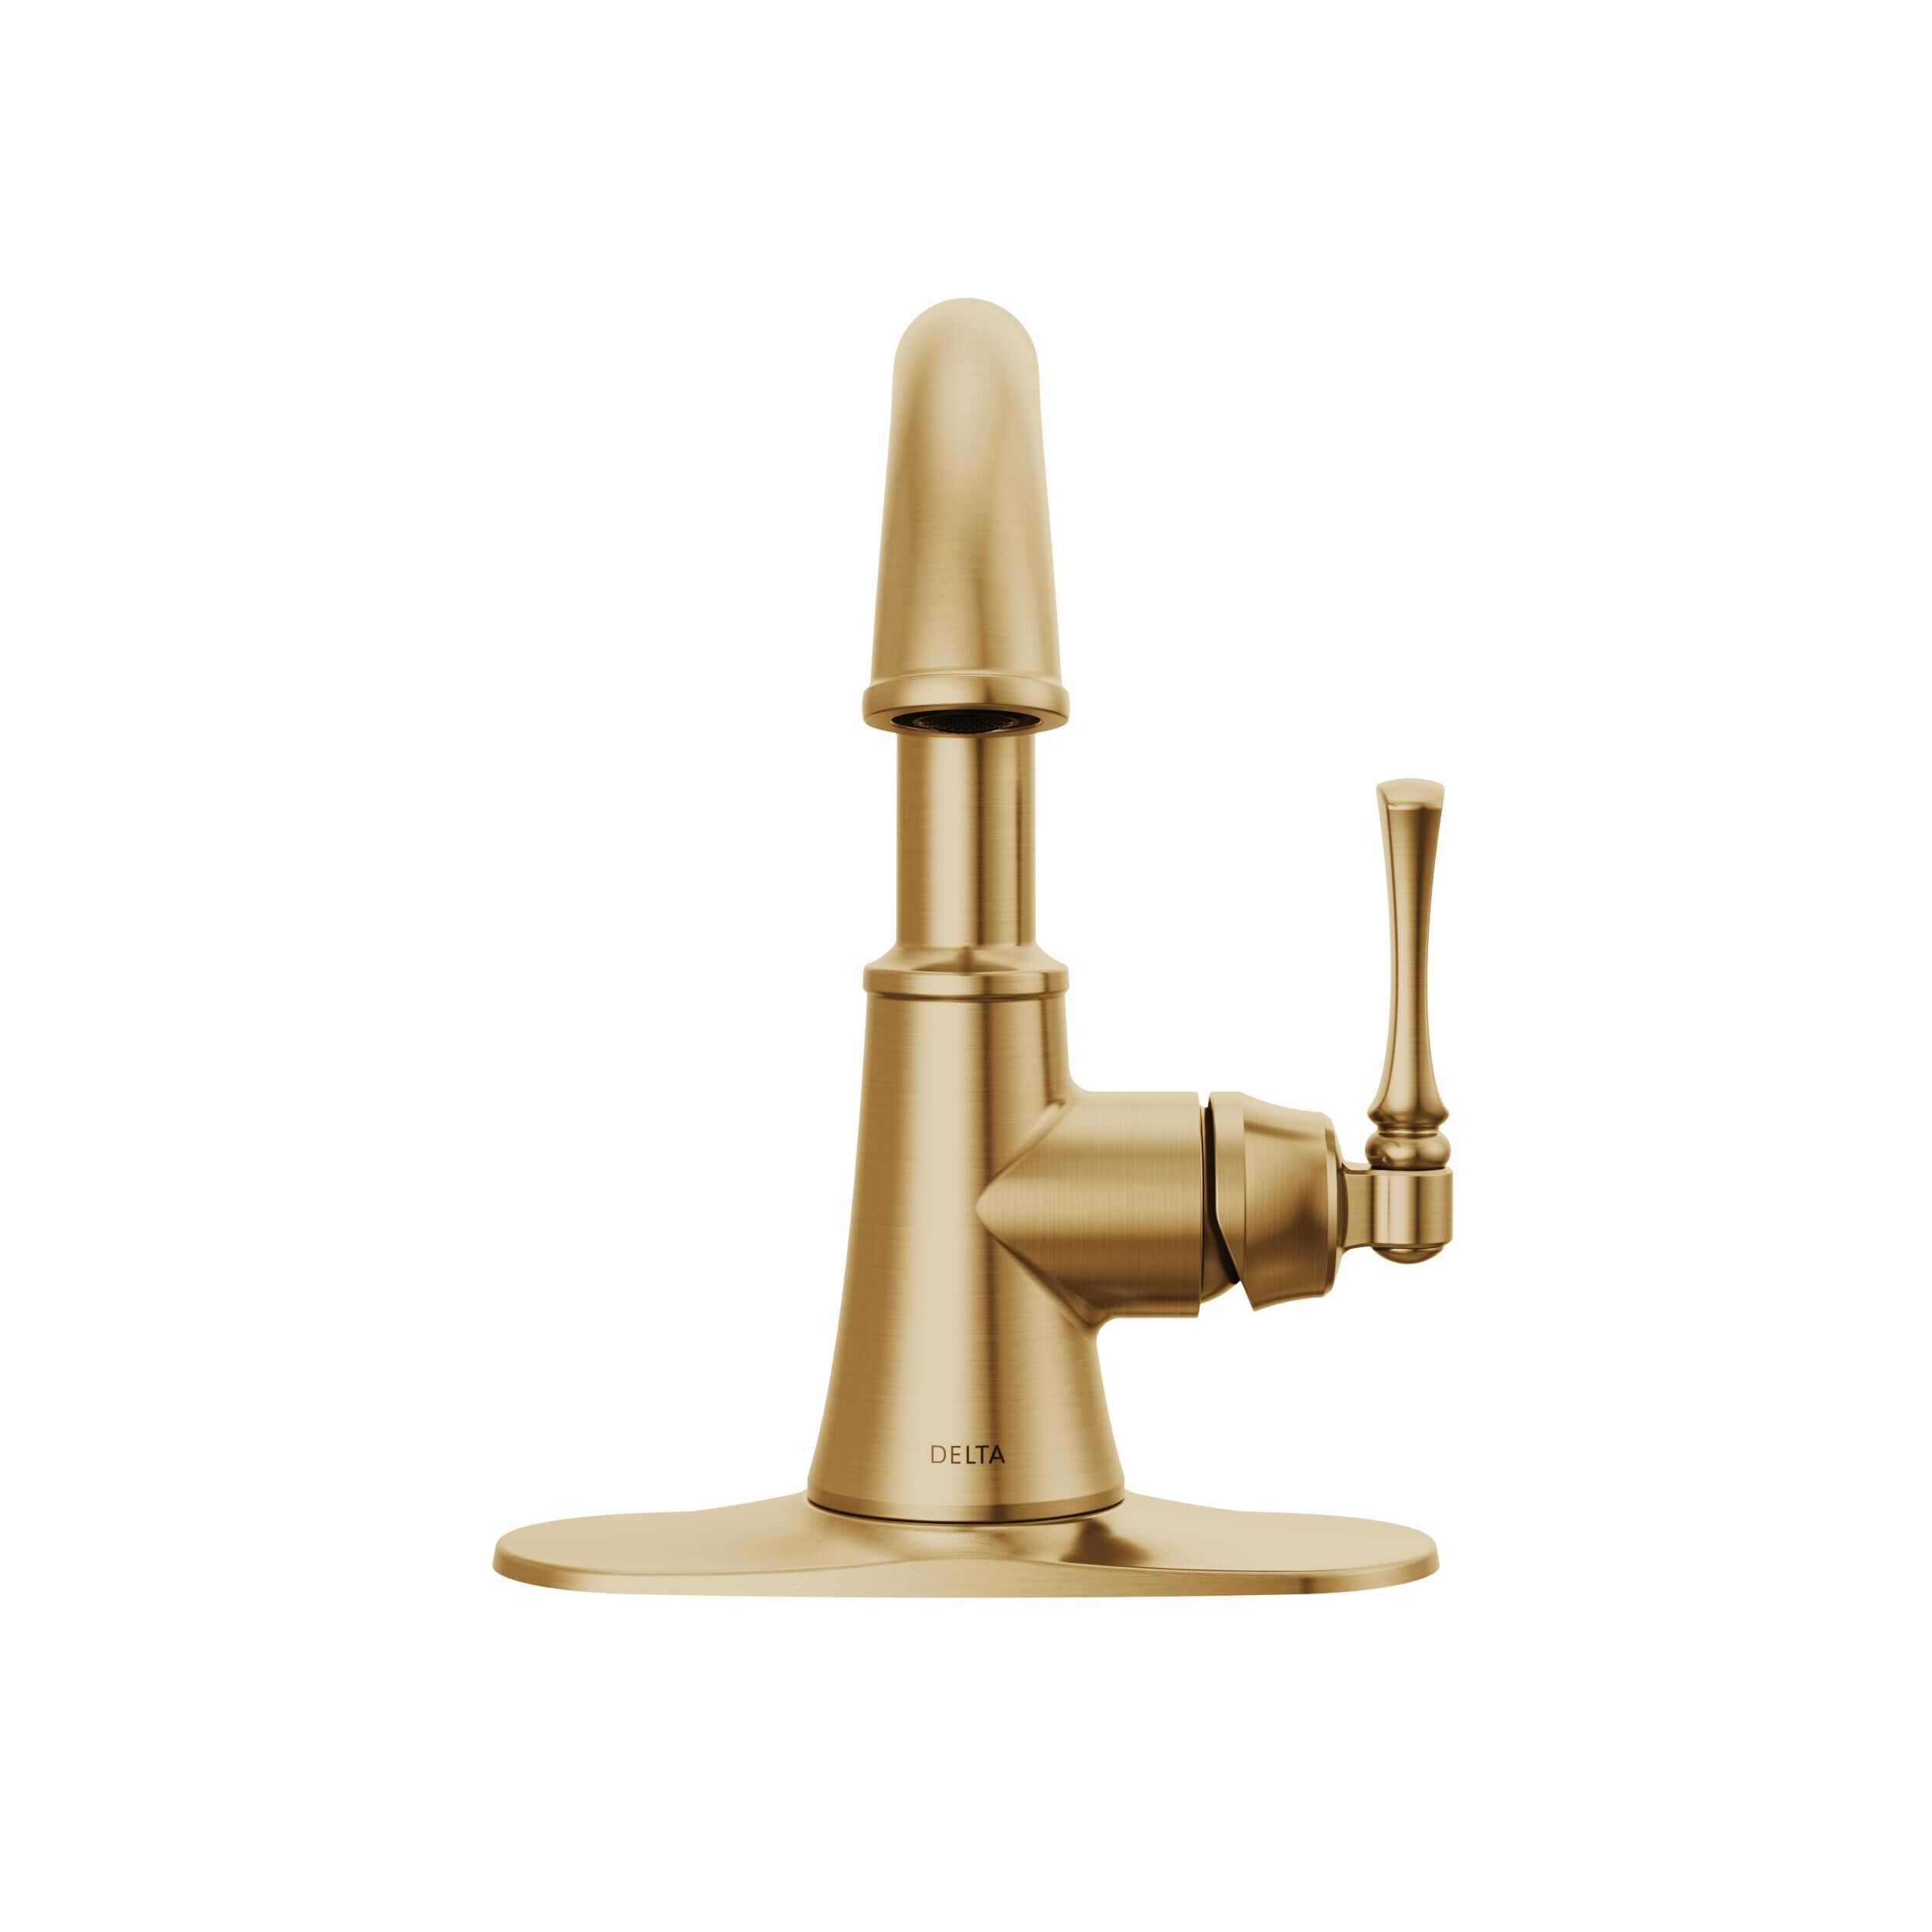 DELTA FAUCET 798LF-CZ, 7.50 x 3.41 x 7.50 inches, Champagne Bronze 並行輸入品  浴室、浴槽、洗面所